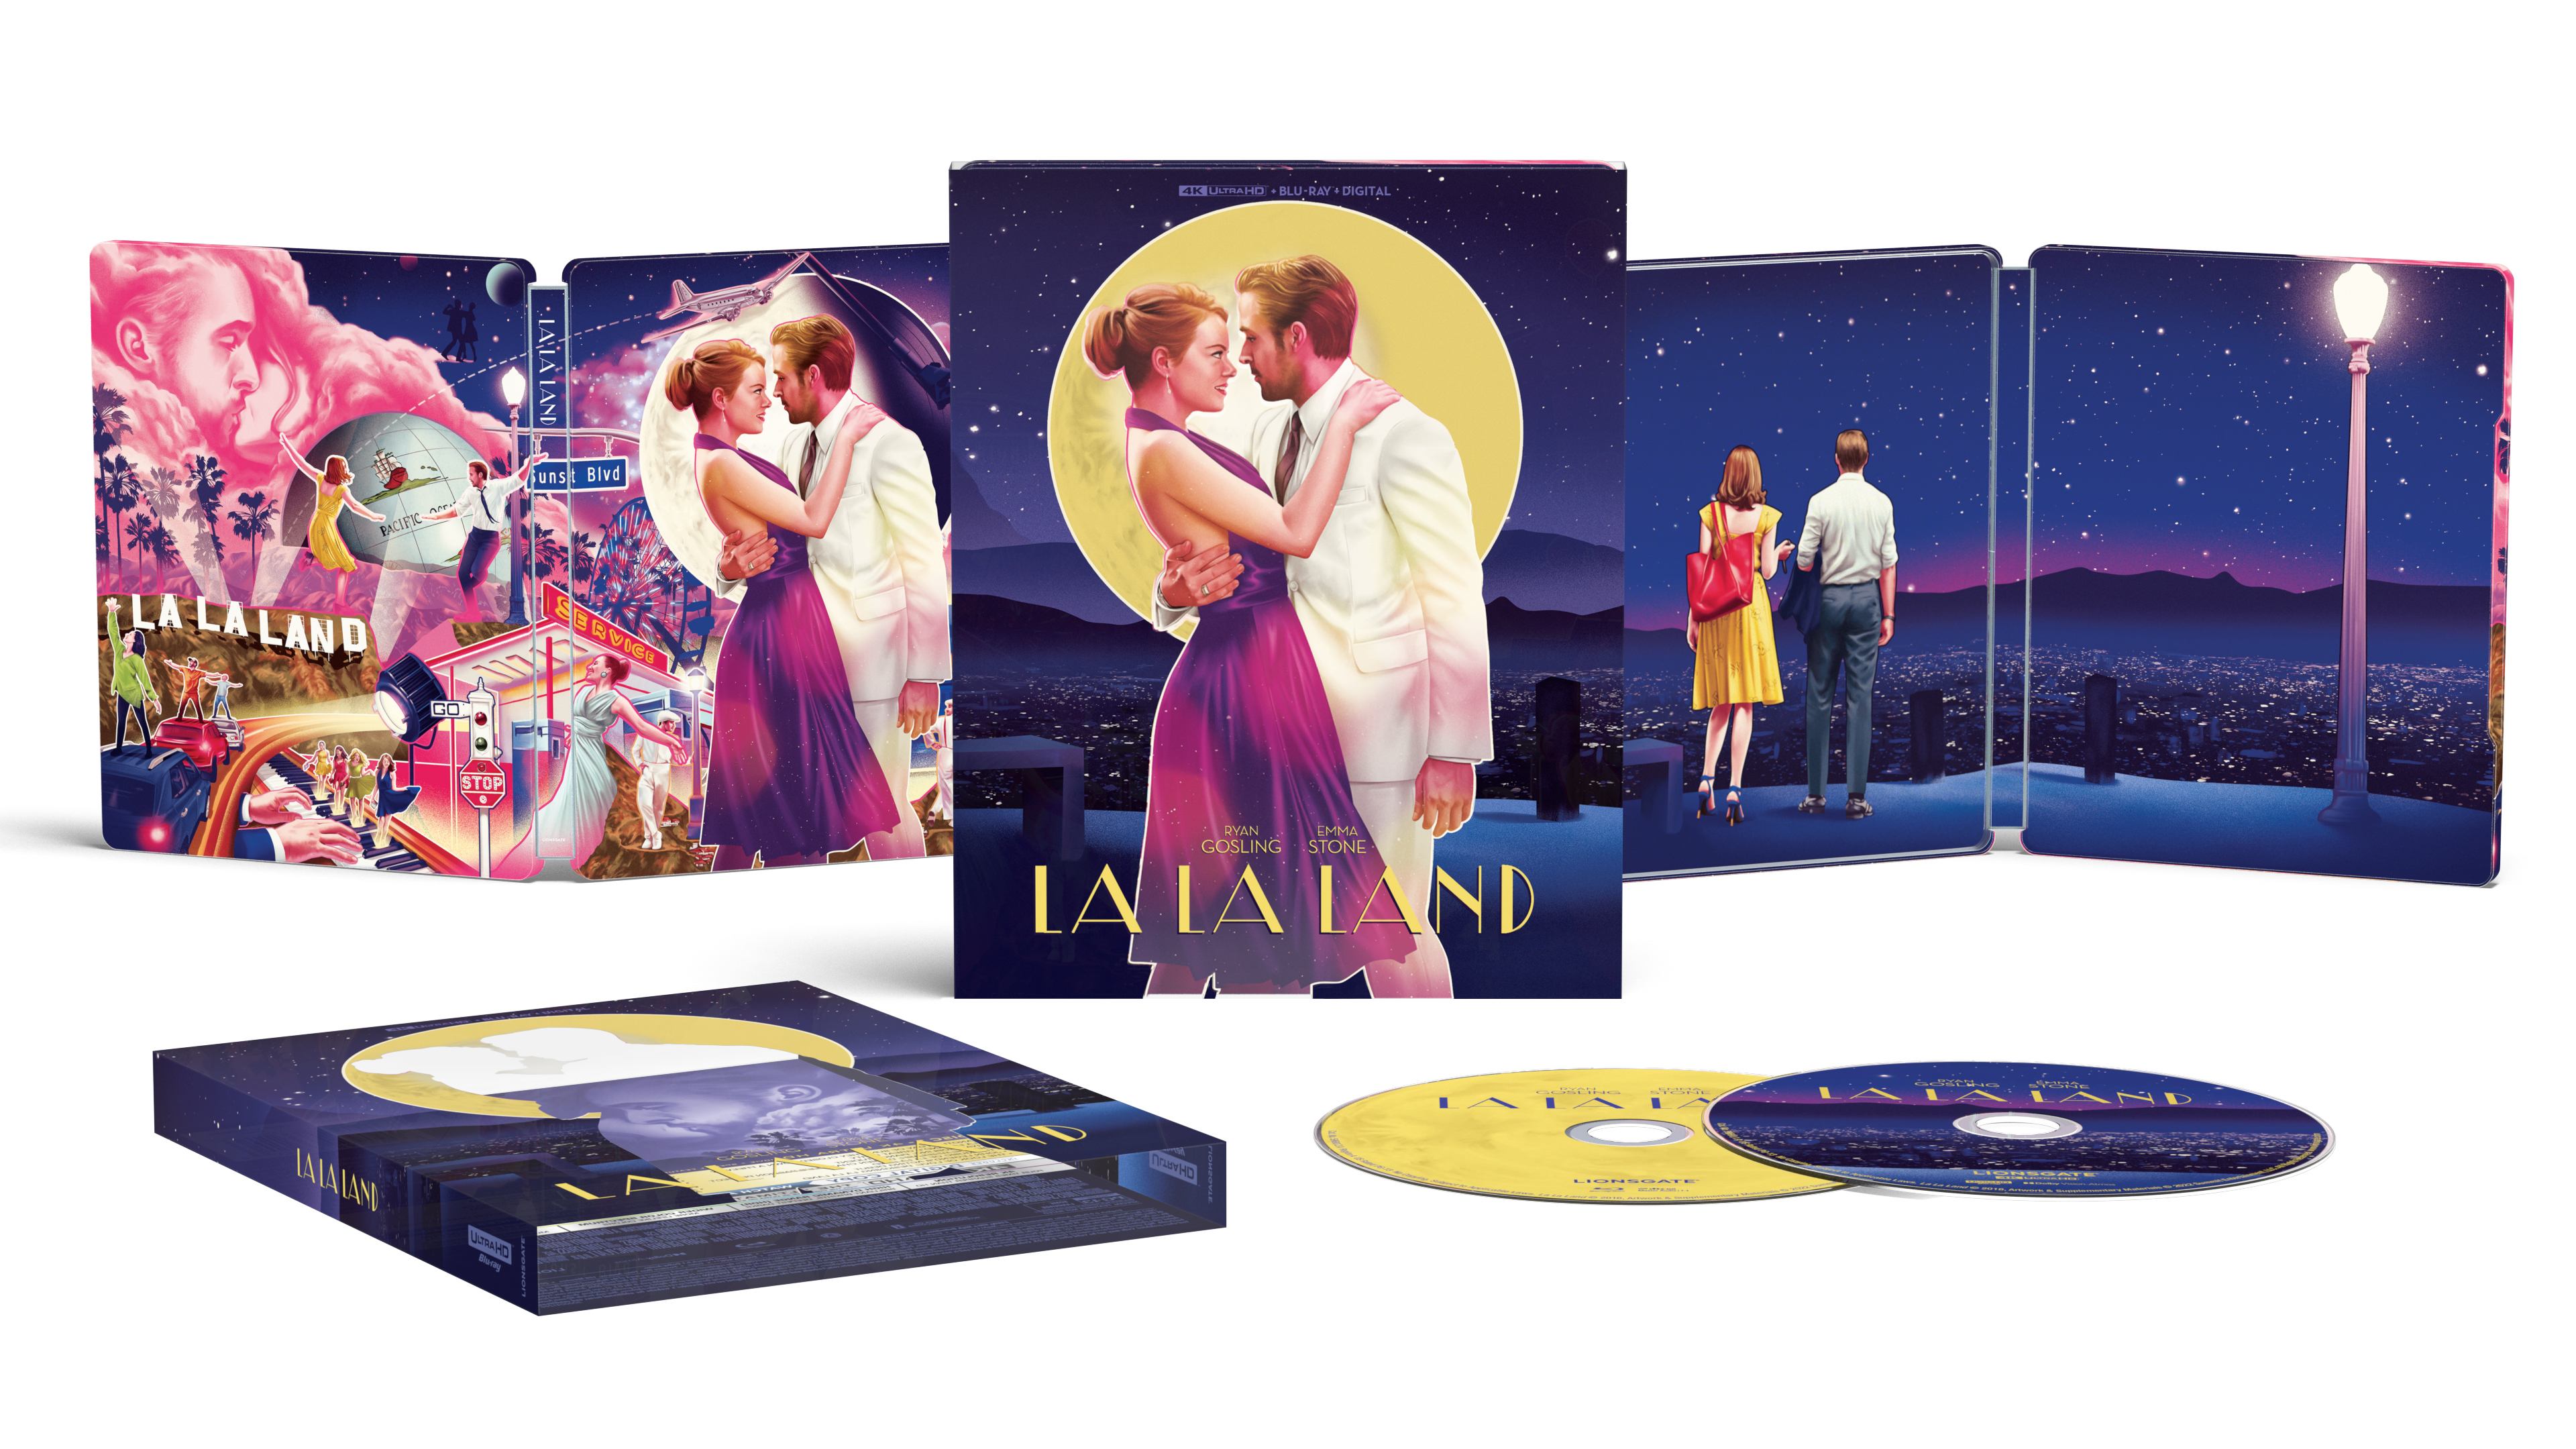 La La Land (blu-ray + Dvd + Digital) : Target